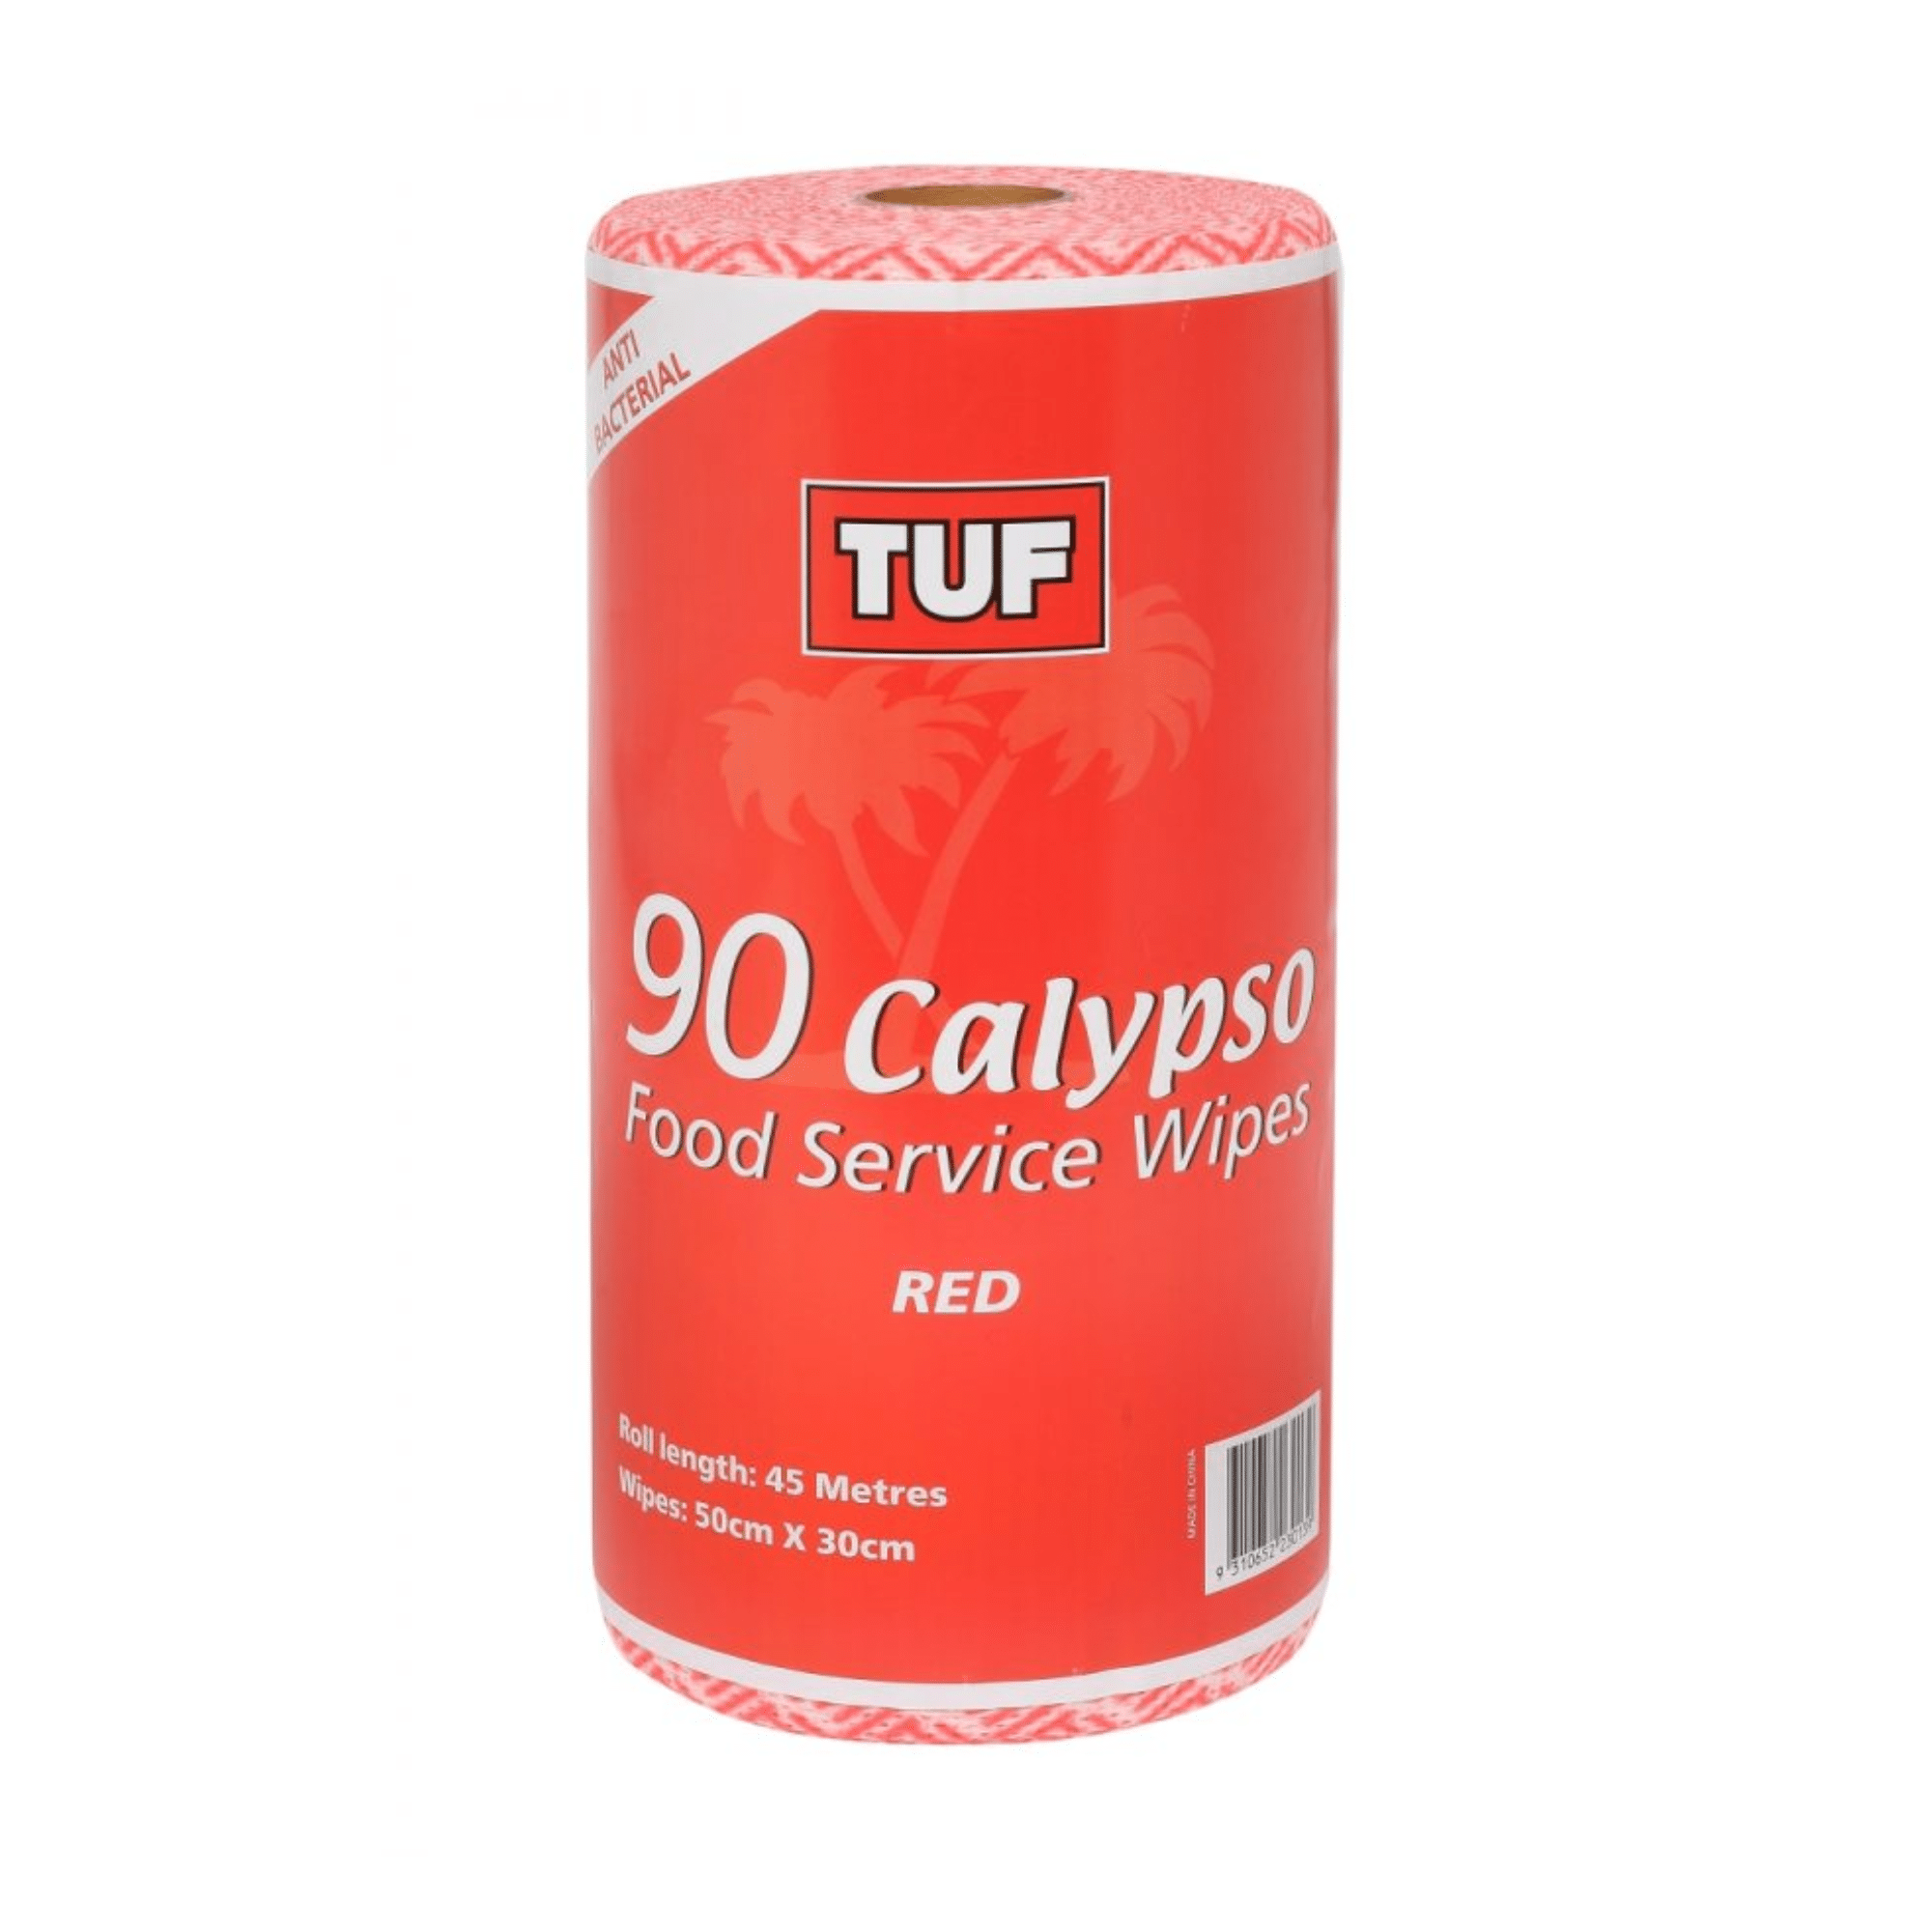 Tuf Wipes Roll Heavy Duty Red 45m